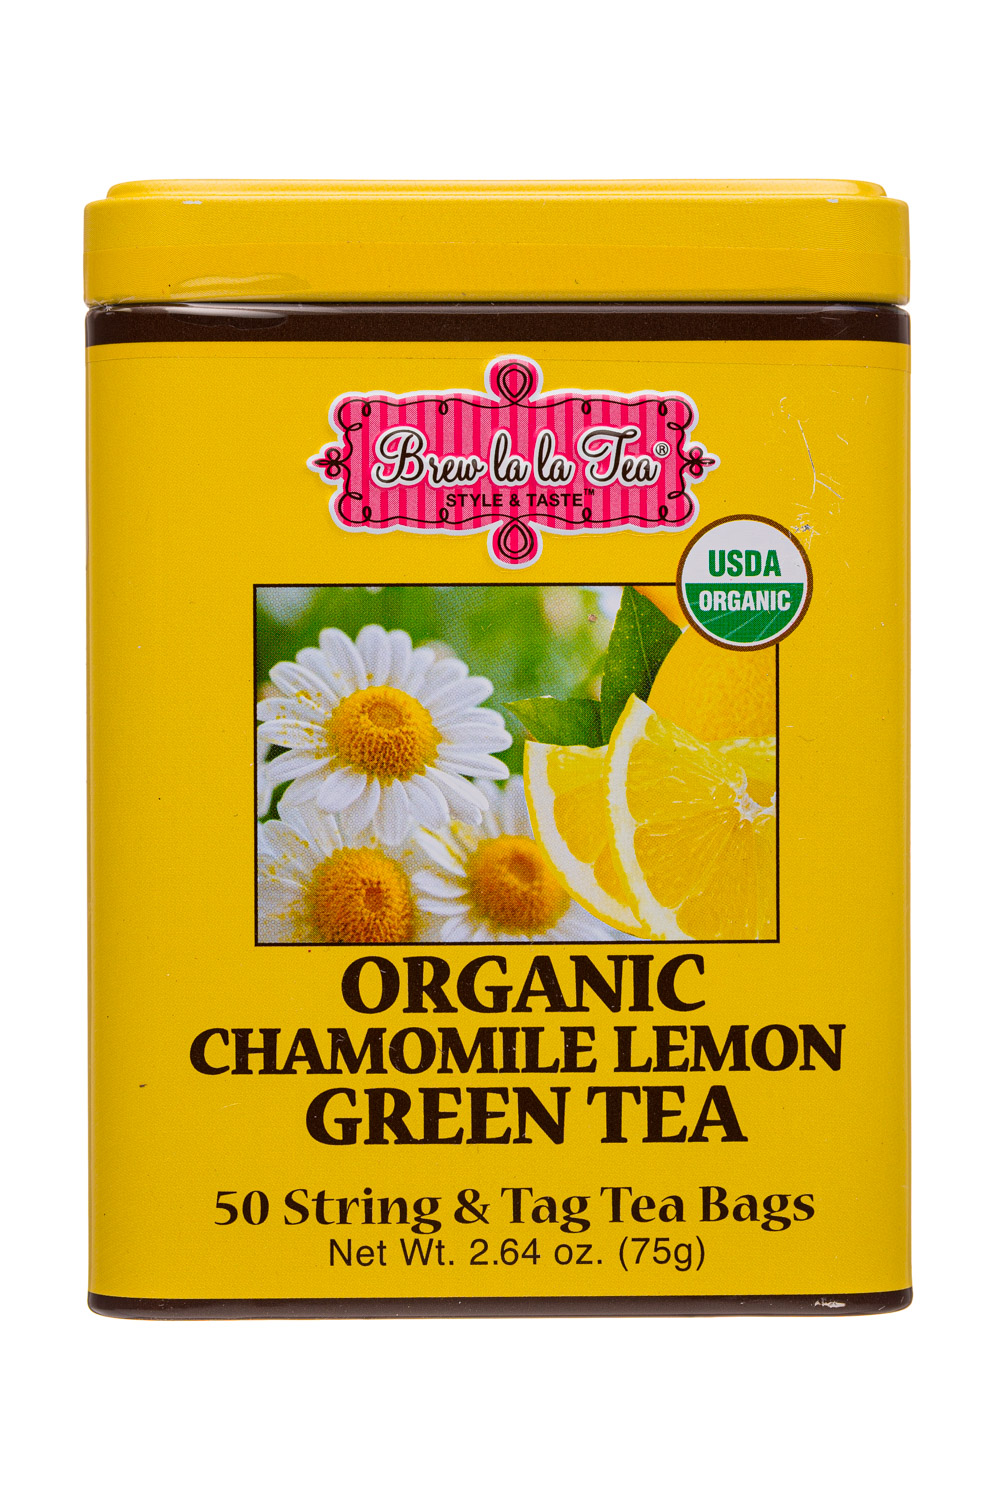  Brew La La Organic Green Tea - Natural Ginger Peach Flavor -  50 Double Chambered Tea Bags - Low Caffeine Tea - USDA Certified Organic -  NonGMO - Gluten Free : Grocery & Gourmet Food